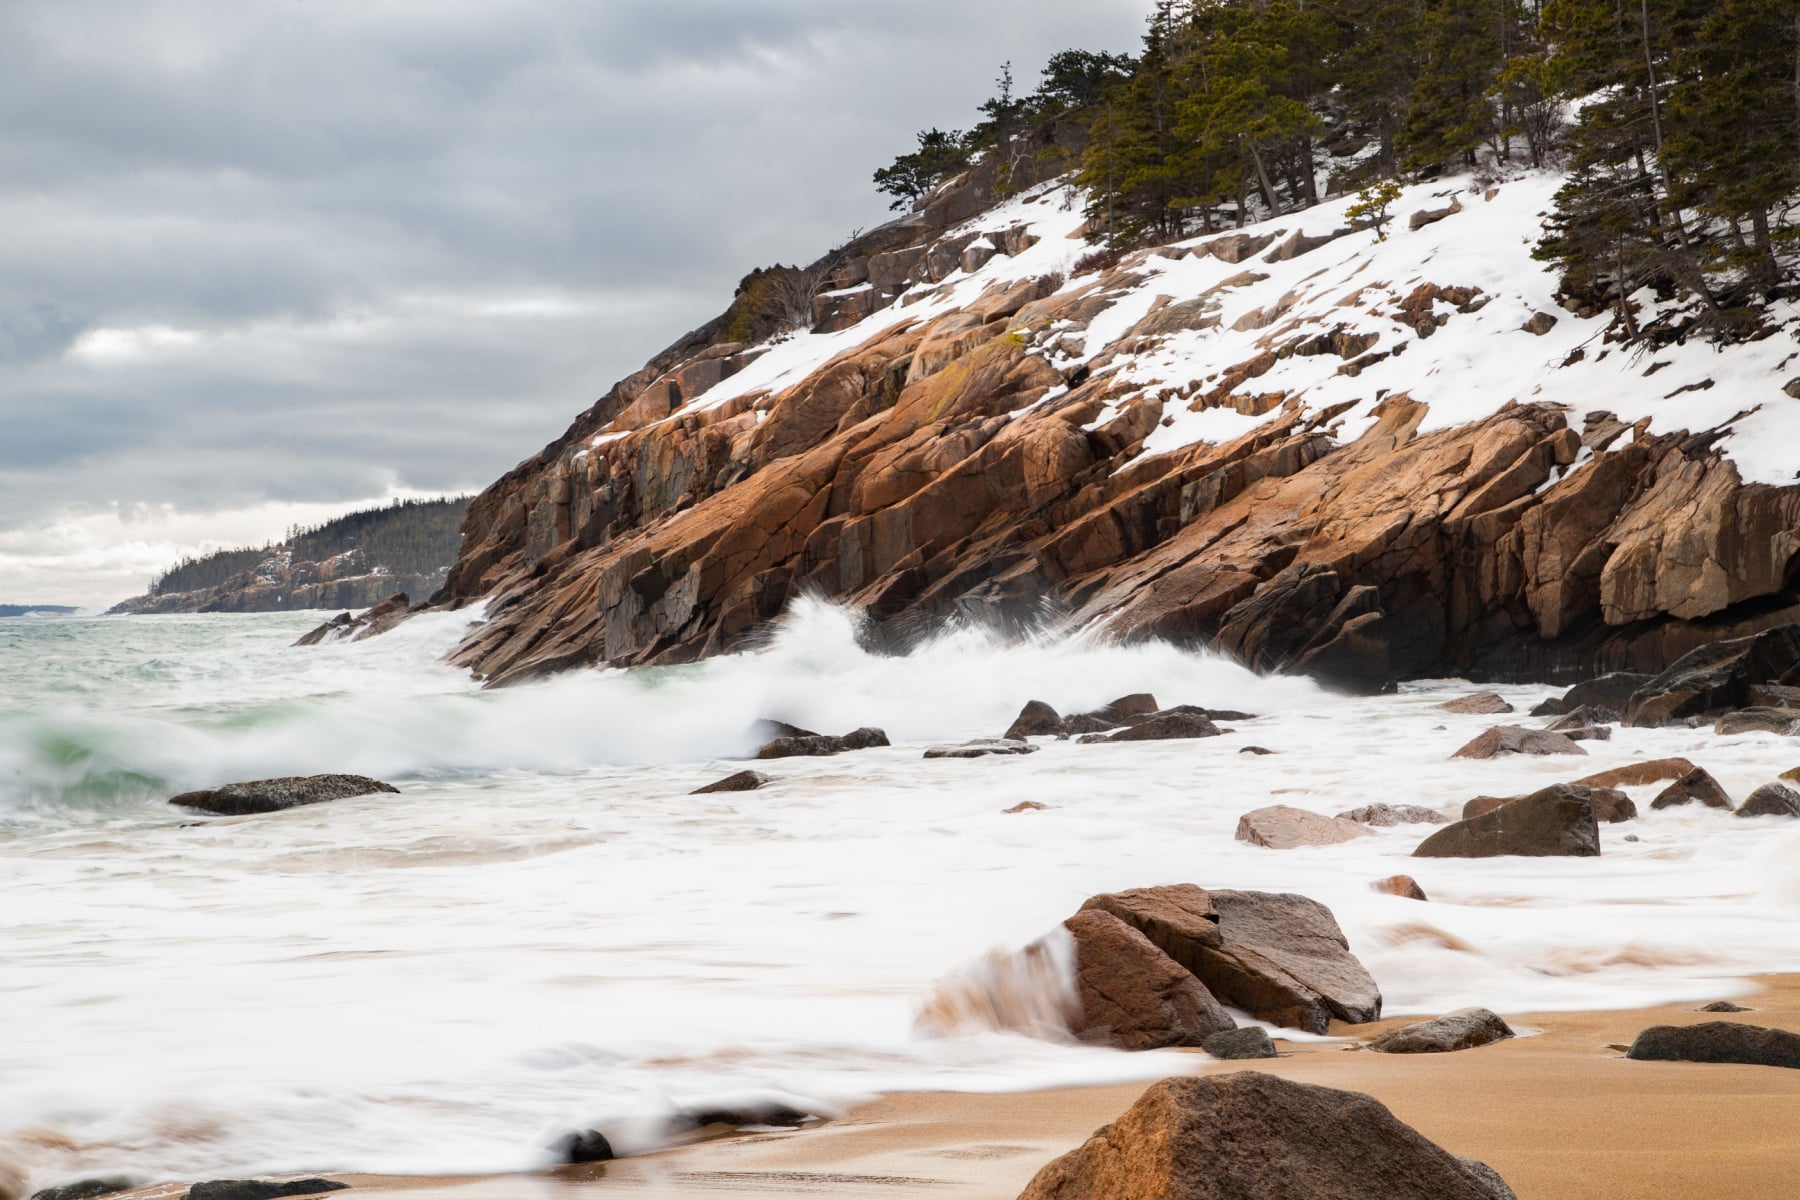 The winter shoreline of Acadia National Park on Mount Desert Island, Maine